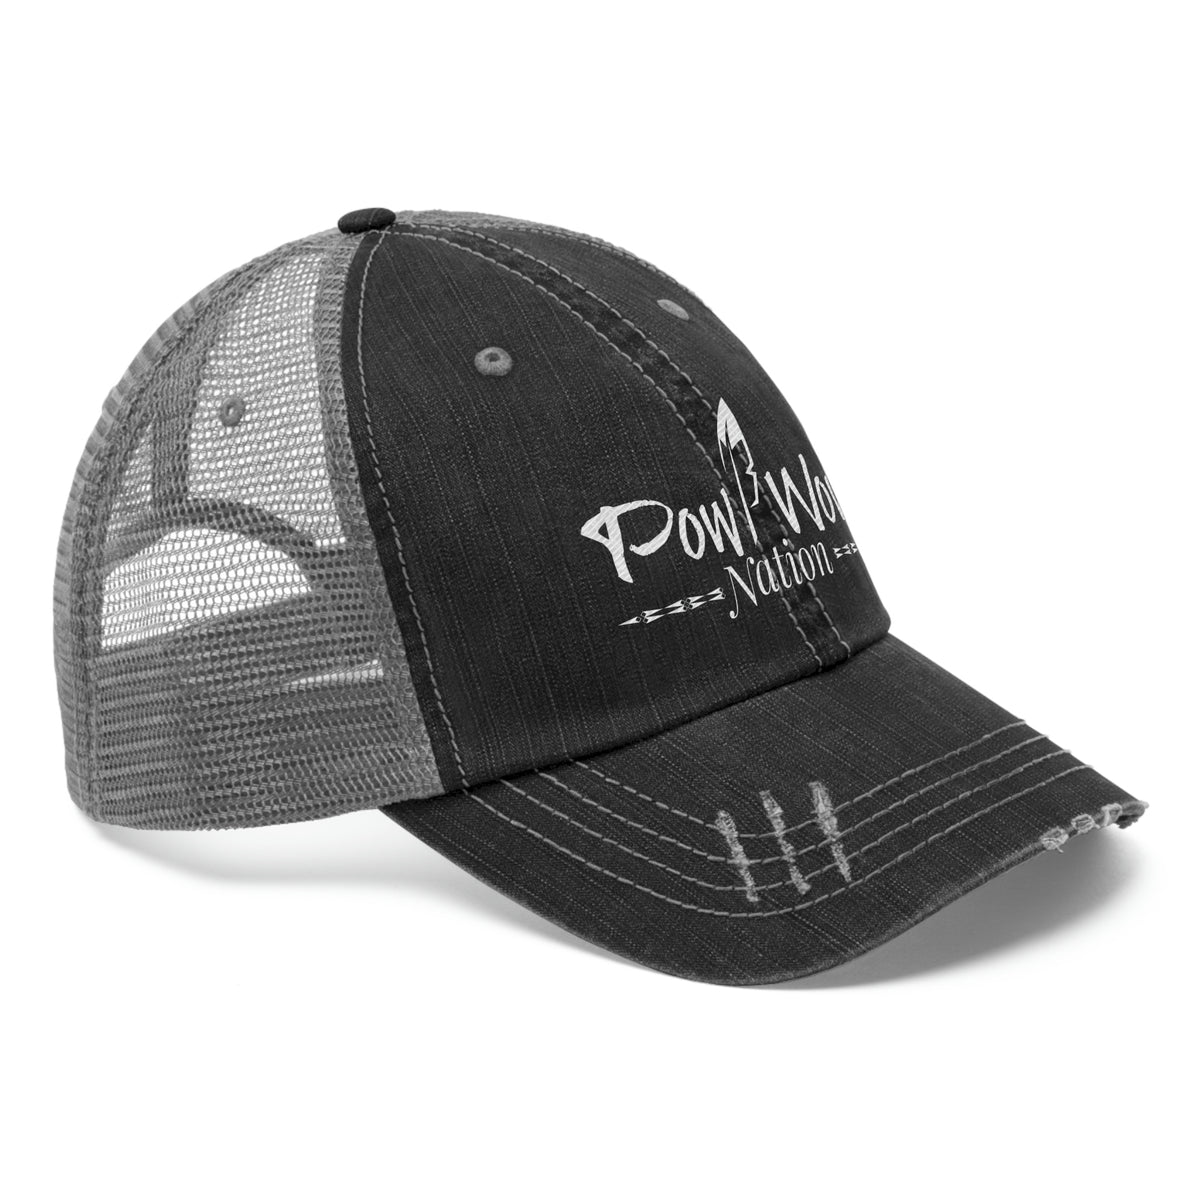 Pow Wow Nation Trucker Hat